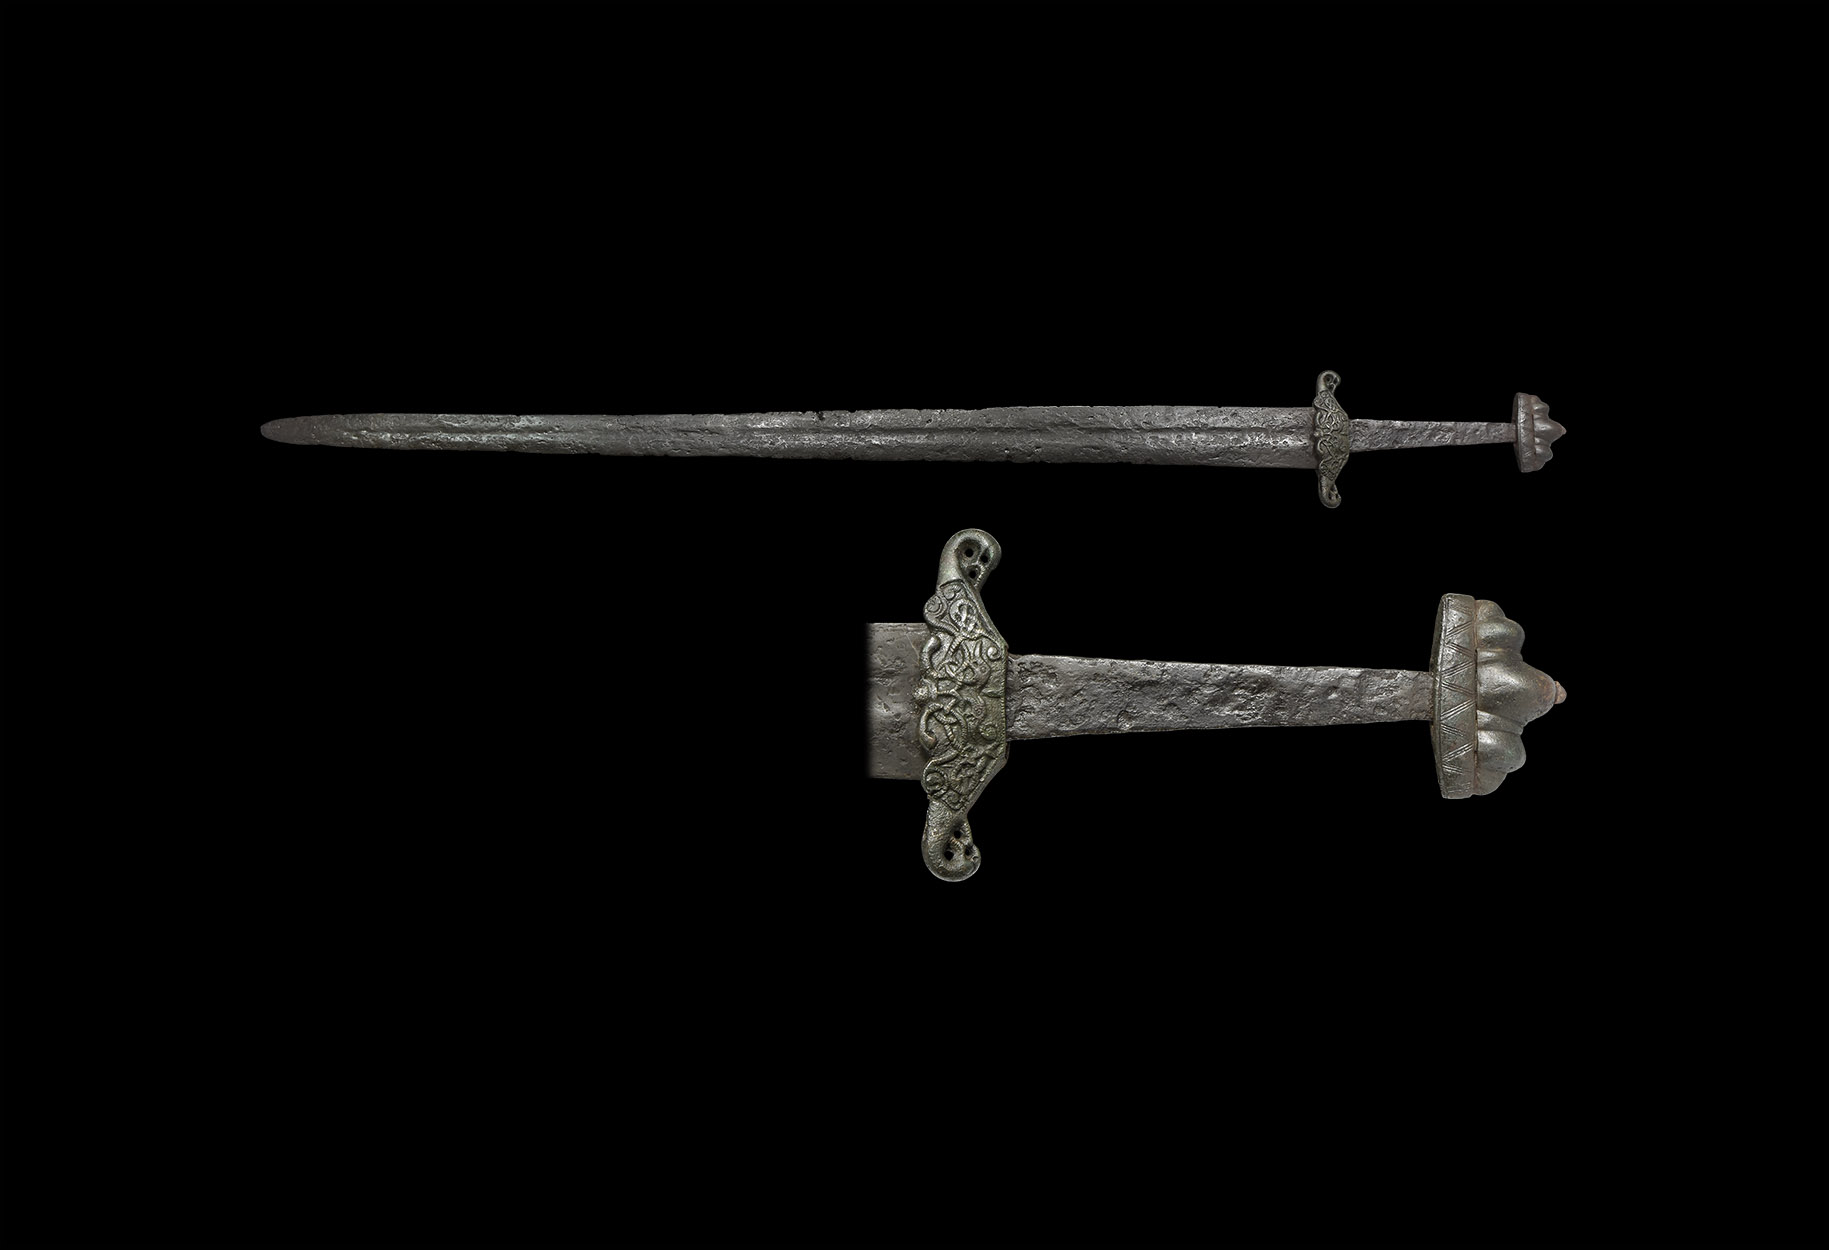 Scandinavian Viking Sword with Elaborate Hilt